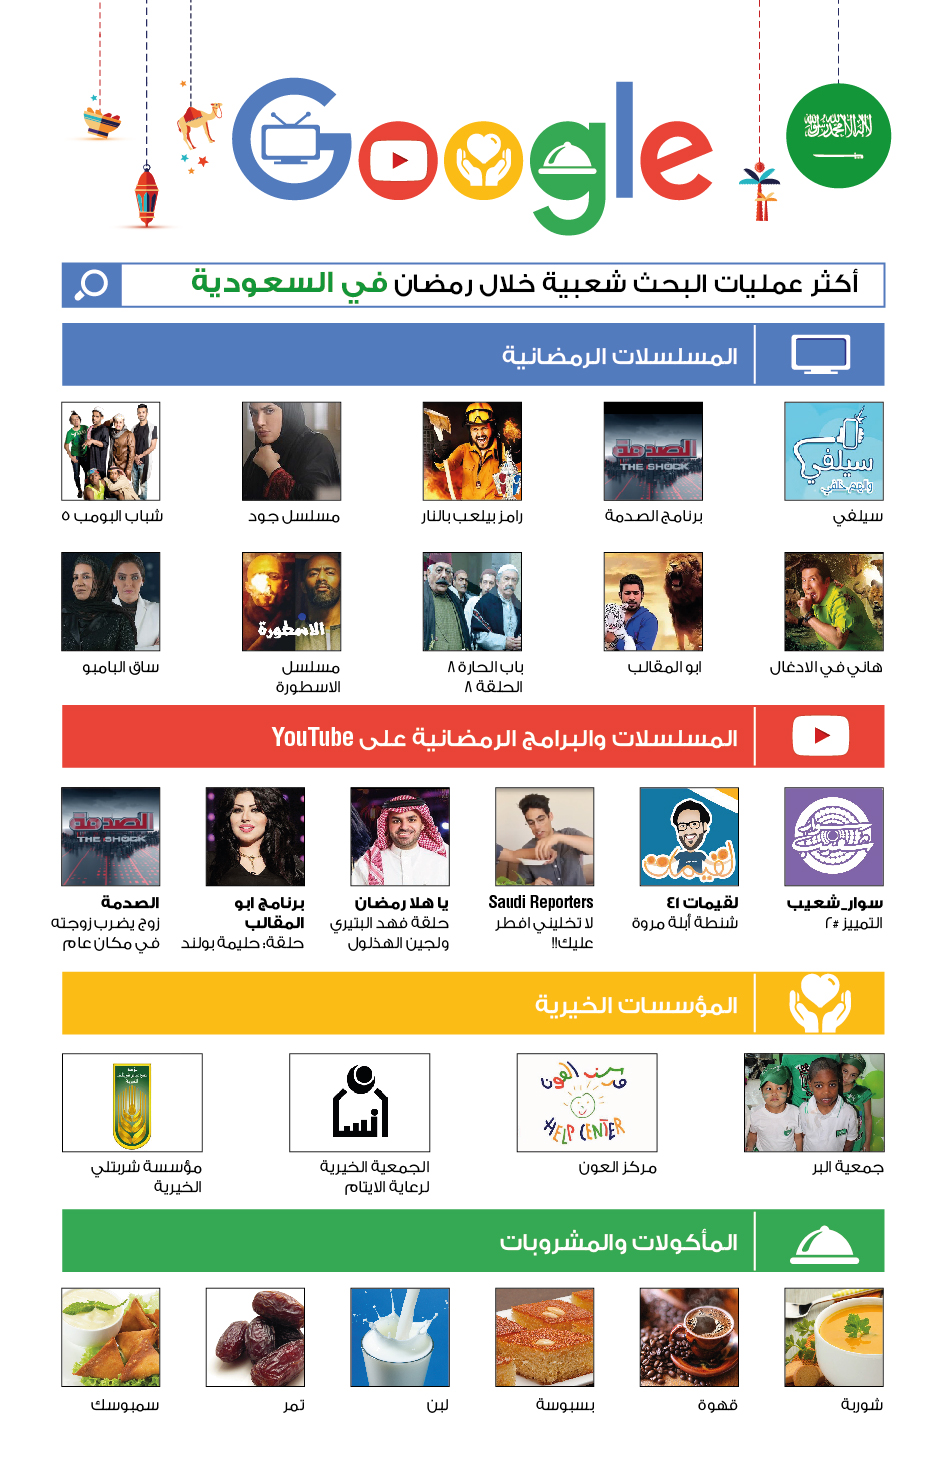 KSA Infographic